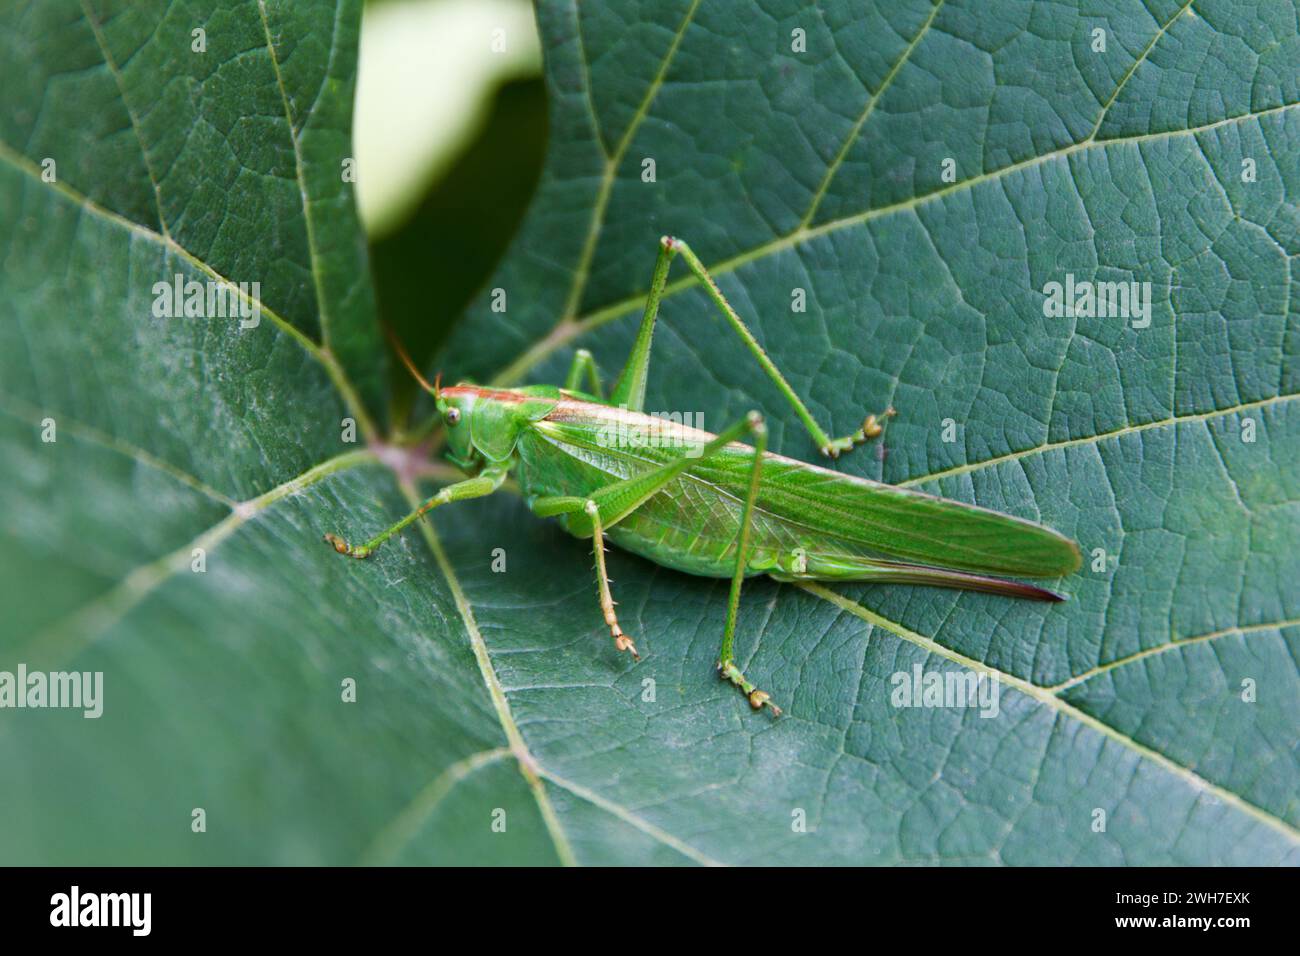 Great green cricket, Tettigonia viridissima, adult female or imago on green big leaf in summer, close up. Focus on cricket Stock Photo